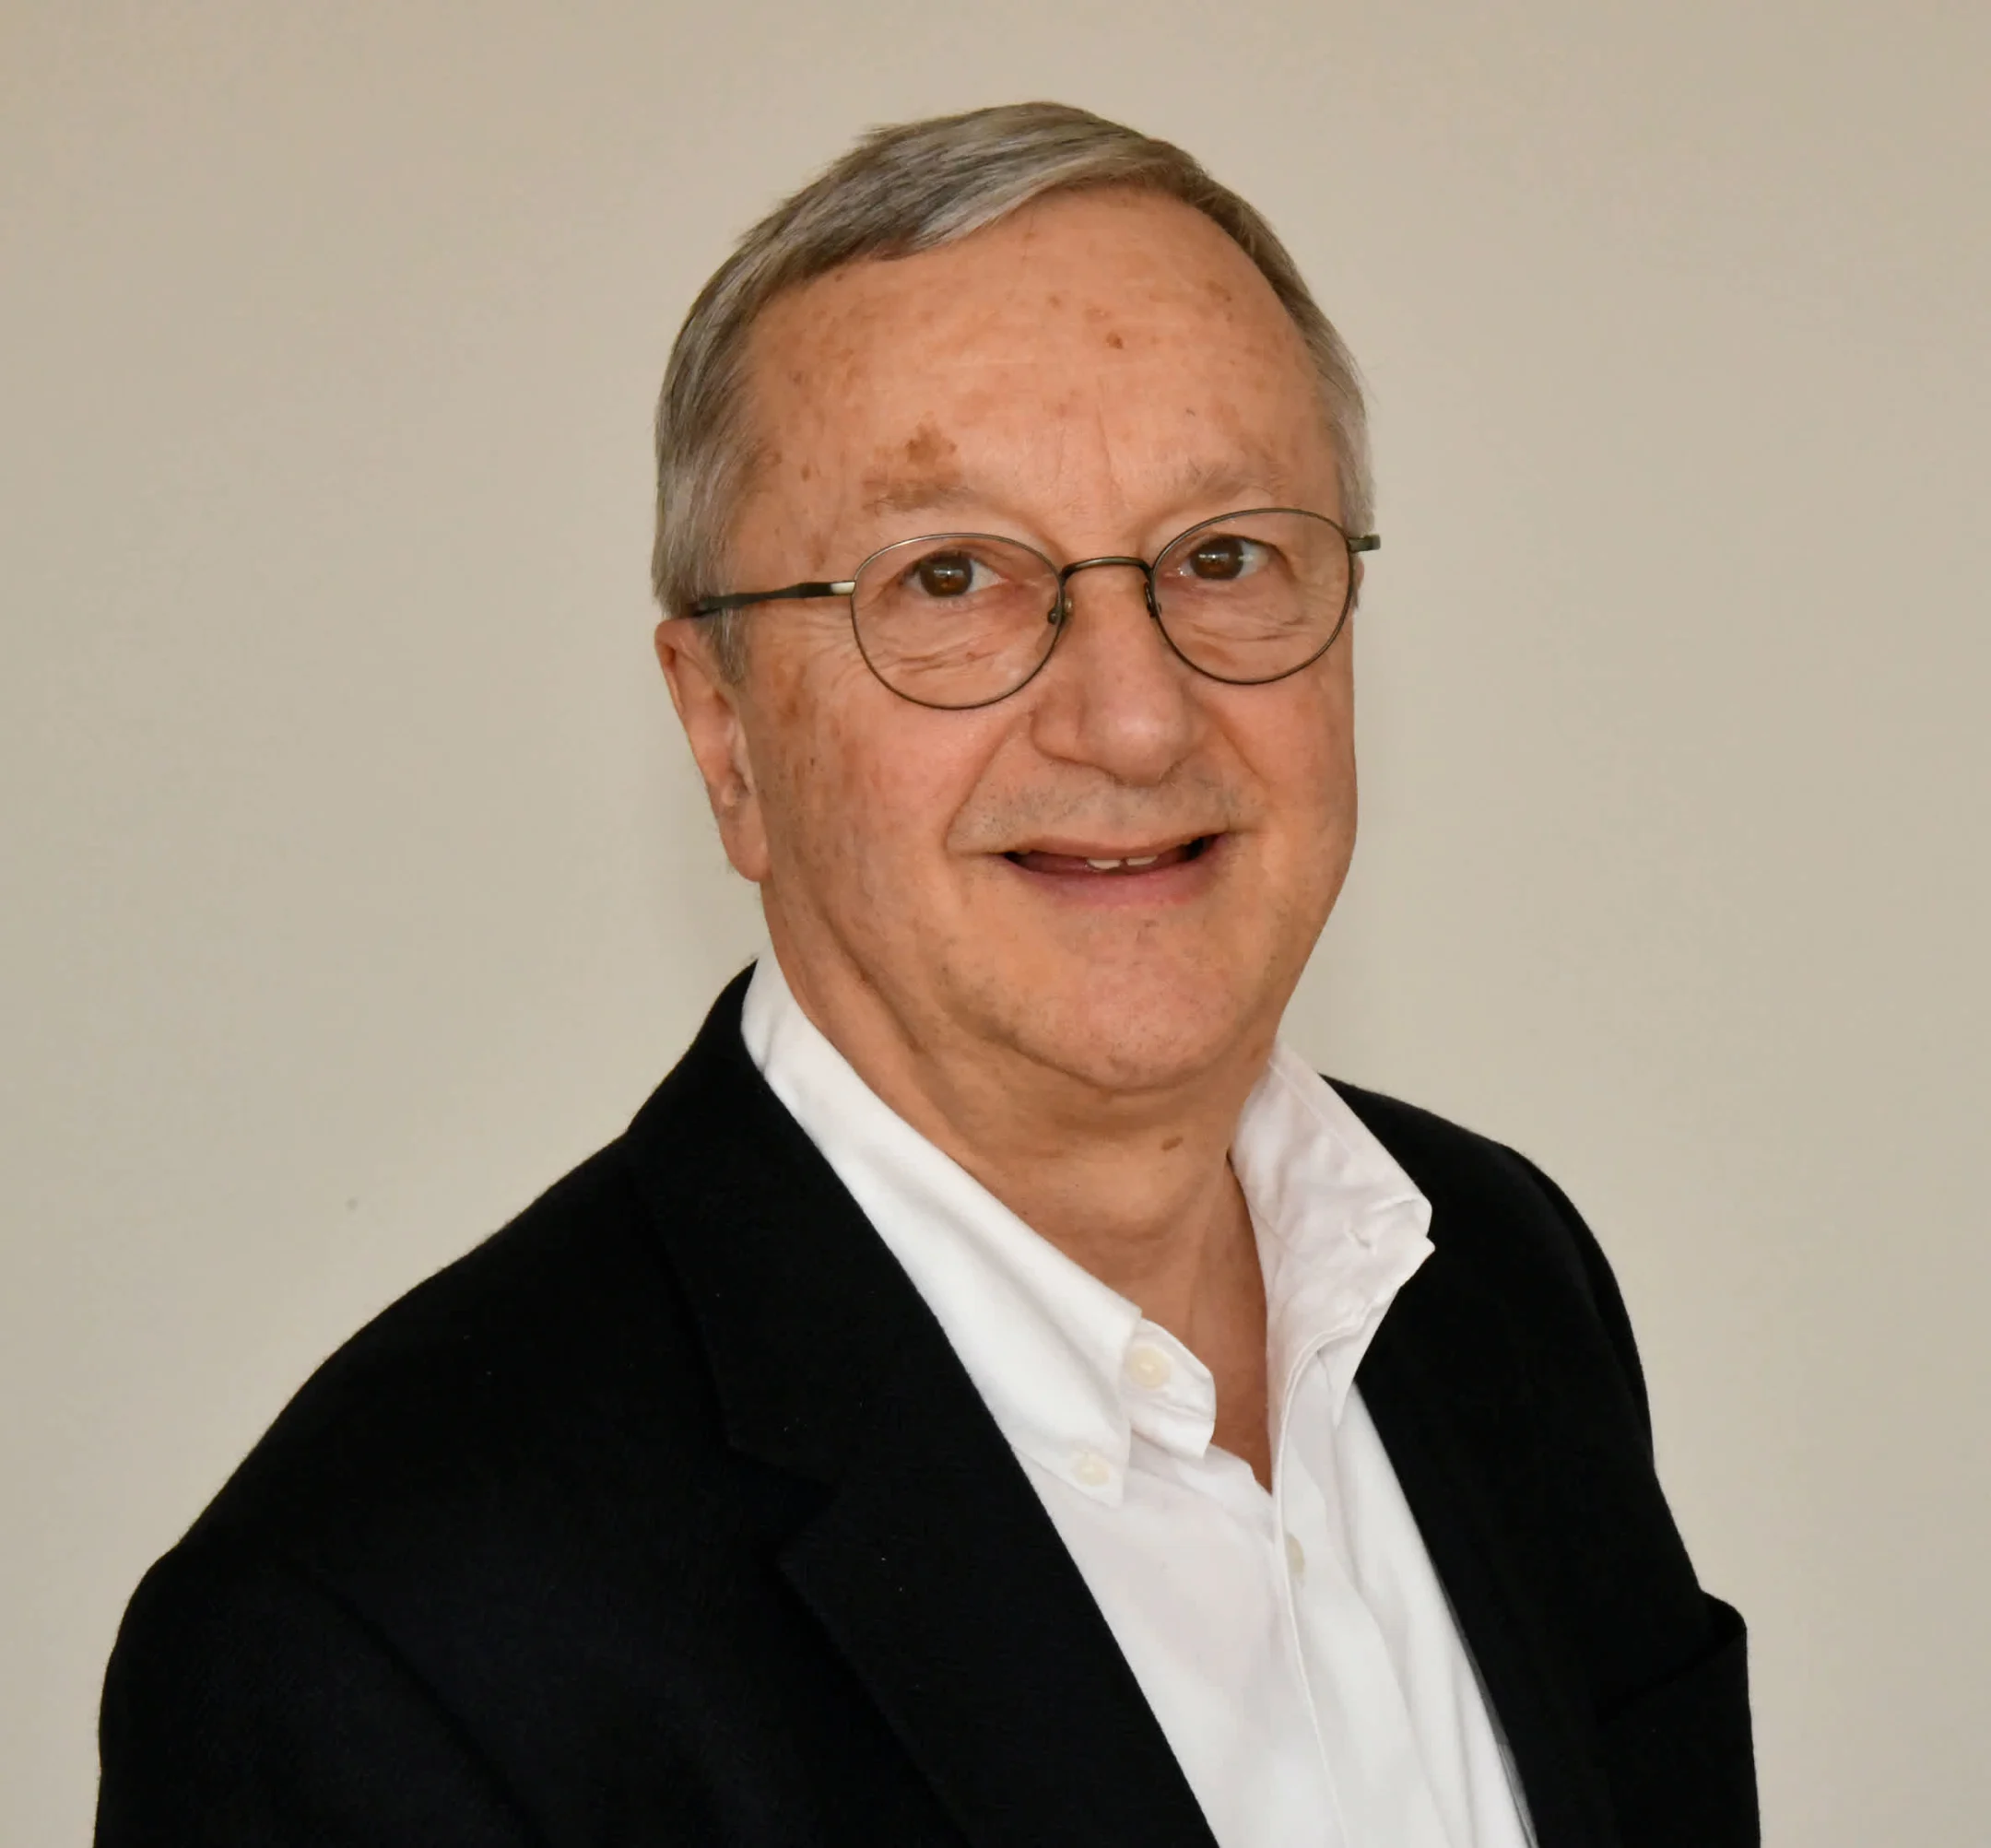 Jean-Francois Baril, Executive Chairman